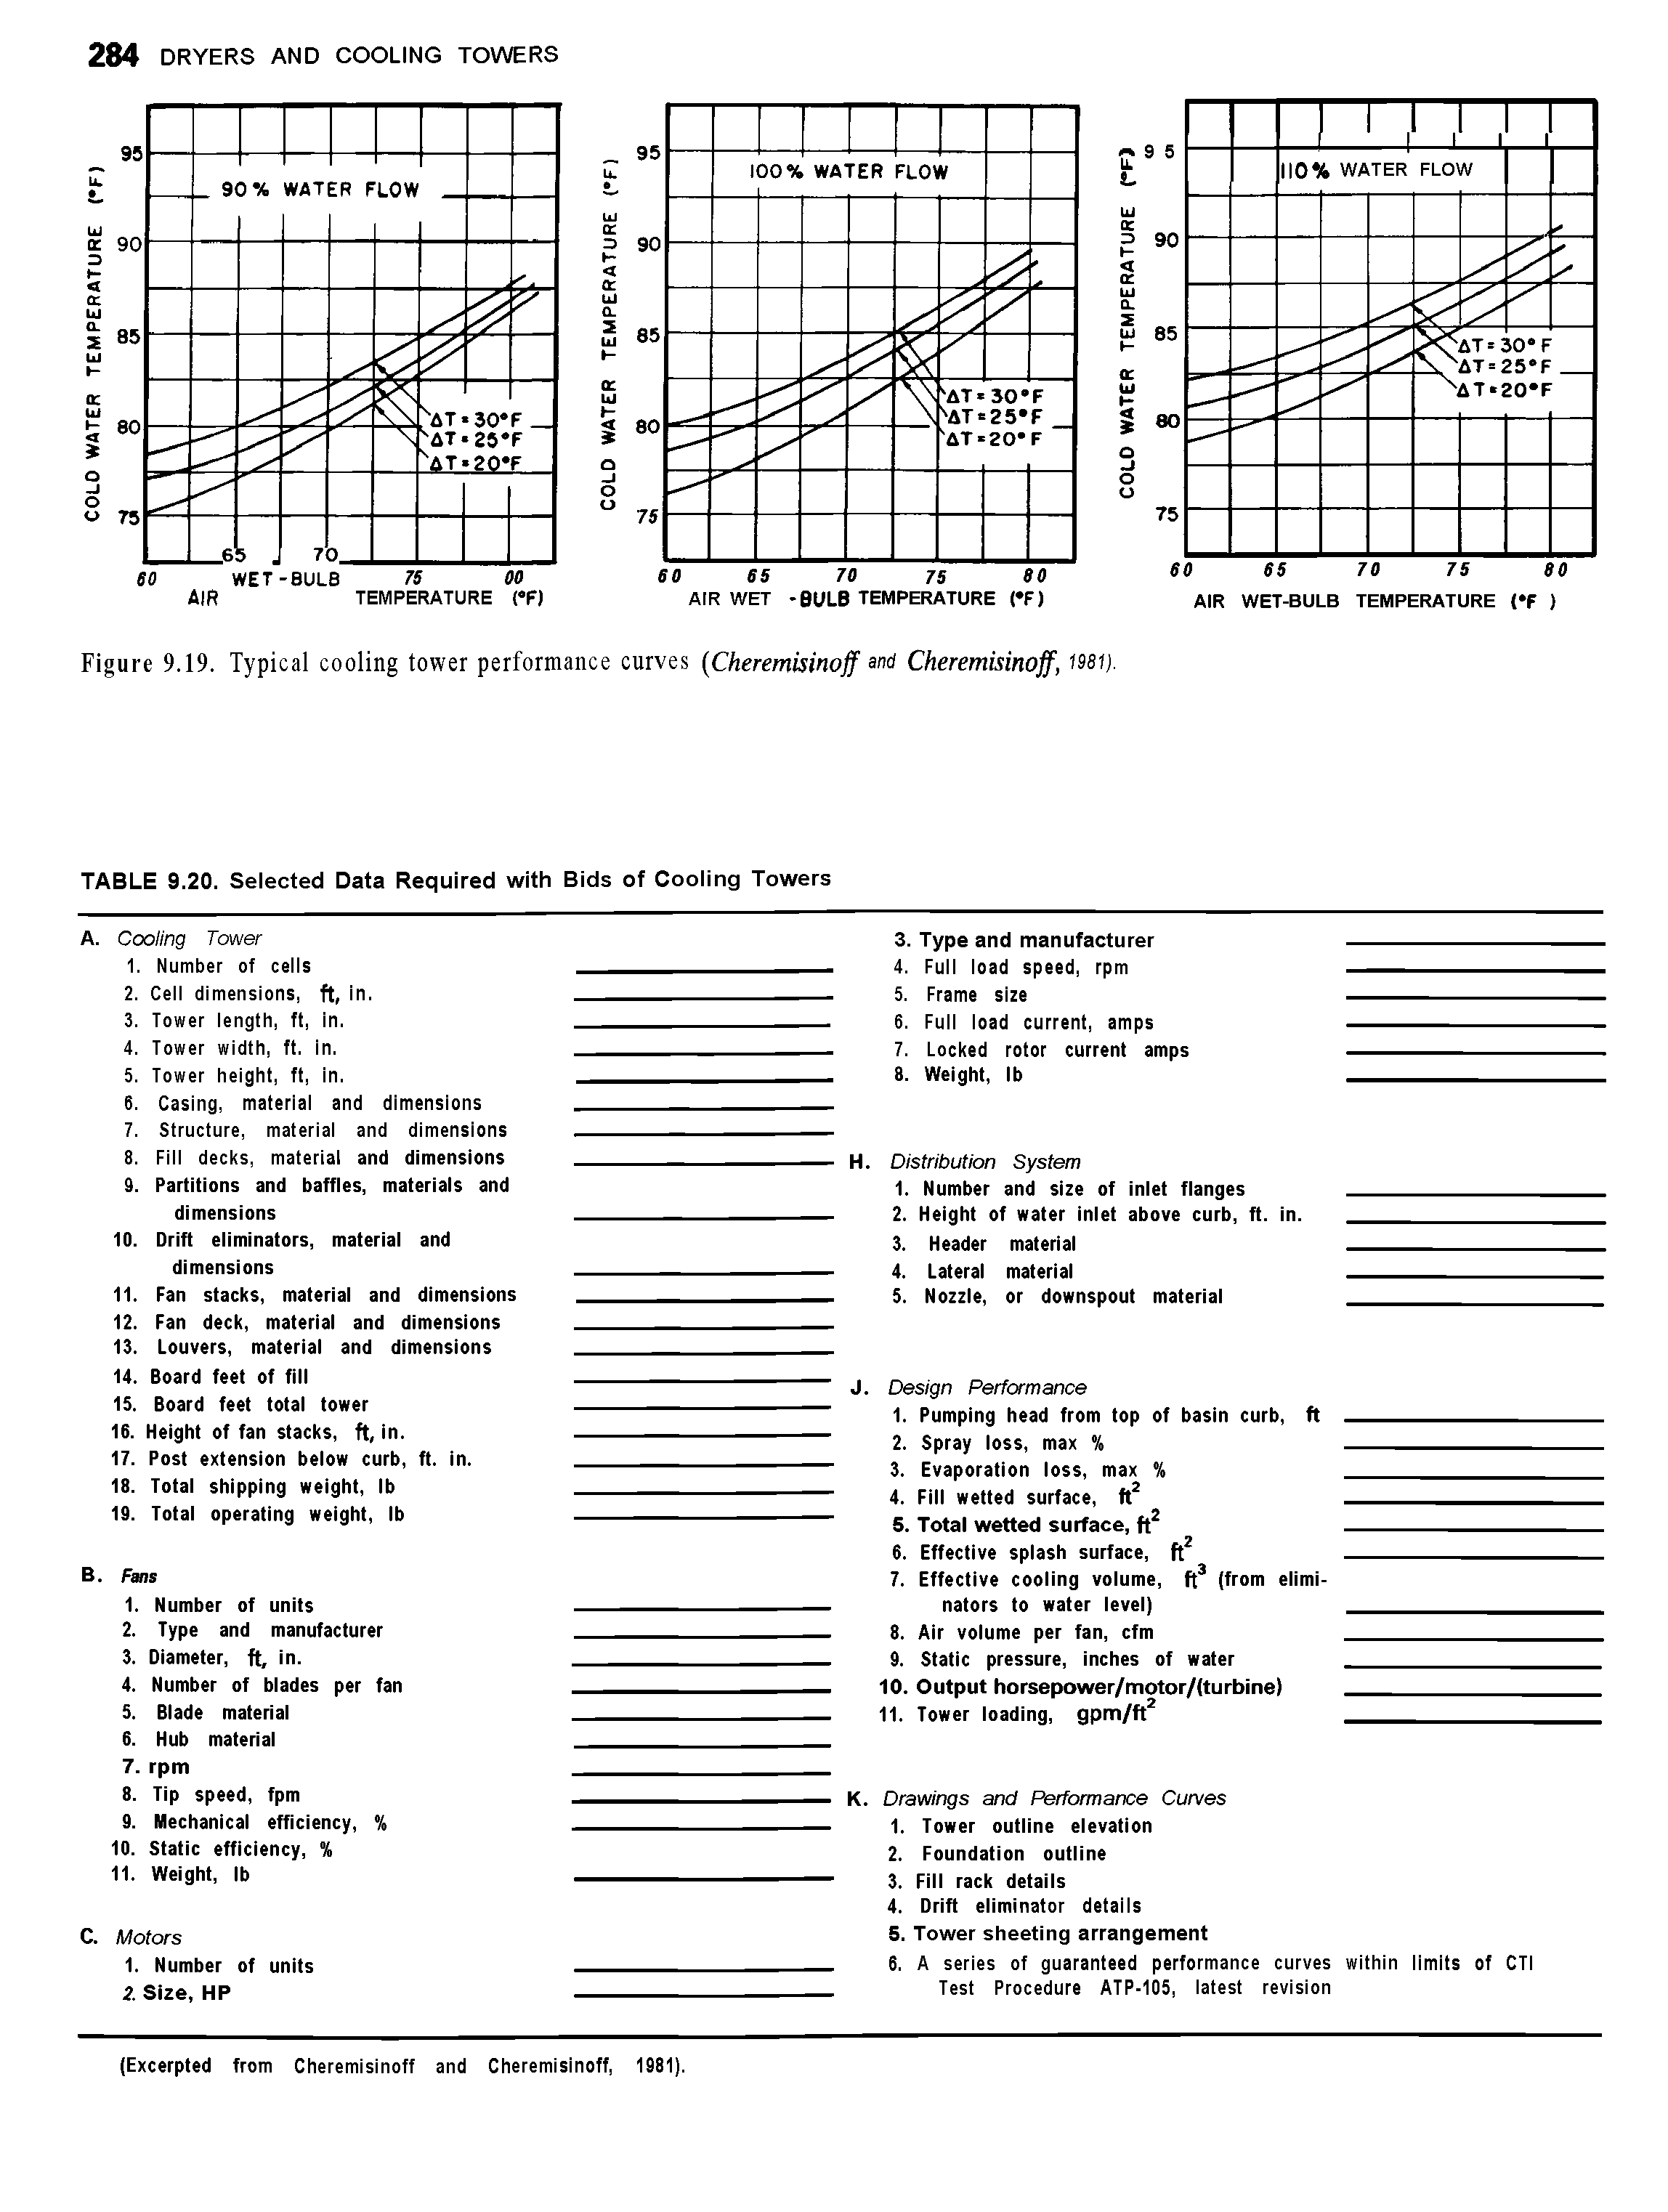 Figure 9.19. Typical cooling tower performance curves (Cheremisinojf snd Cheremisinojf, issi).